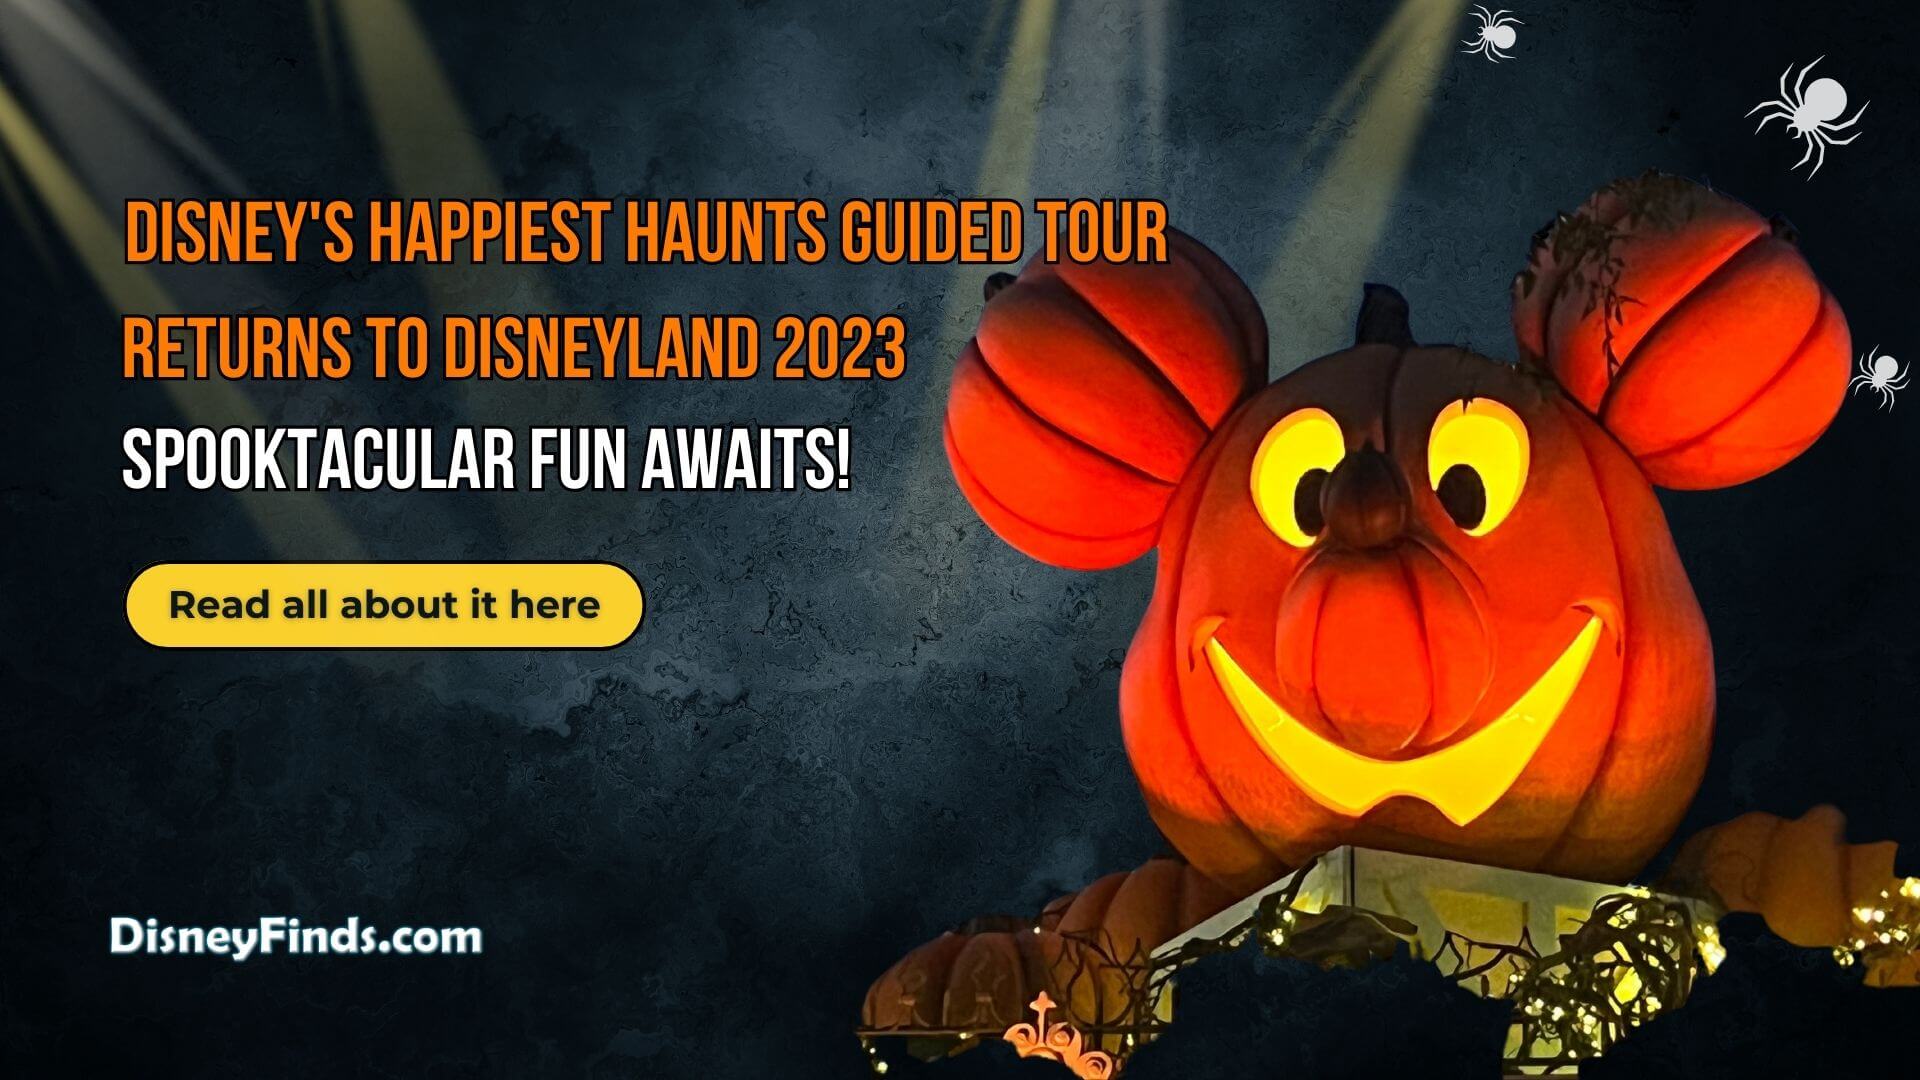 Disney's Happiest Haunts Guided Tour Returns to Disneyland 2023